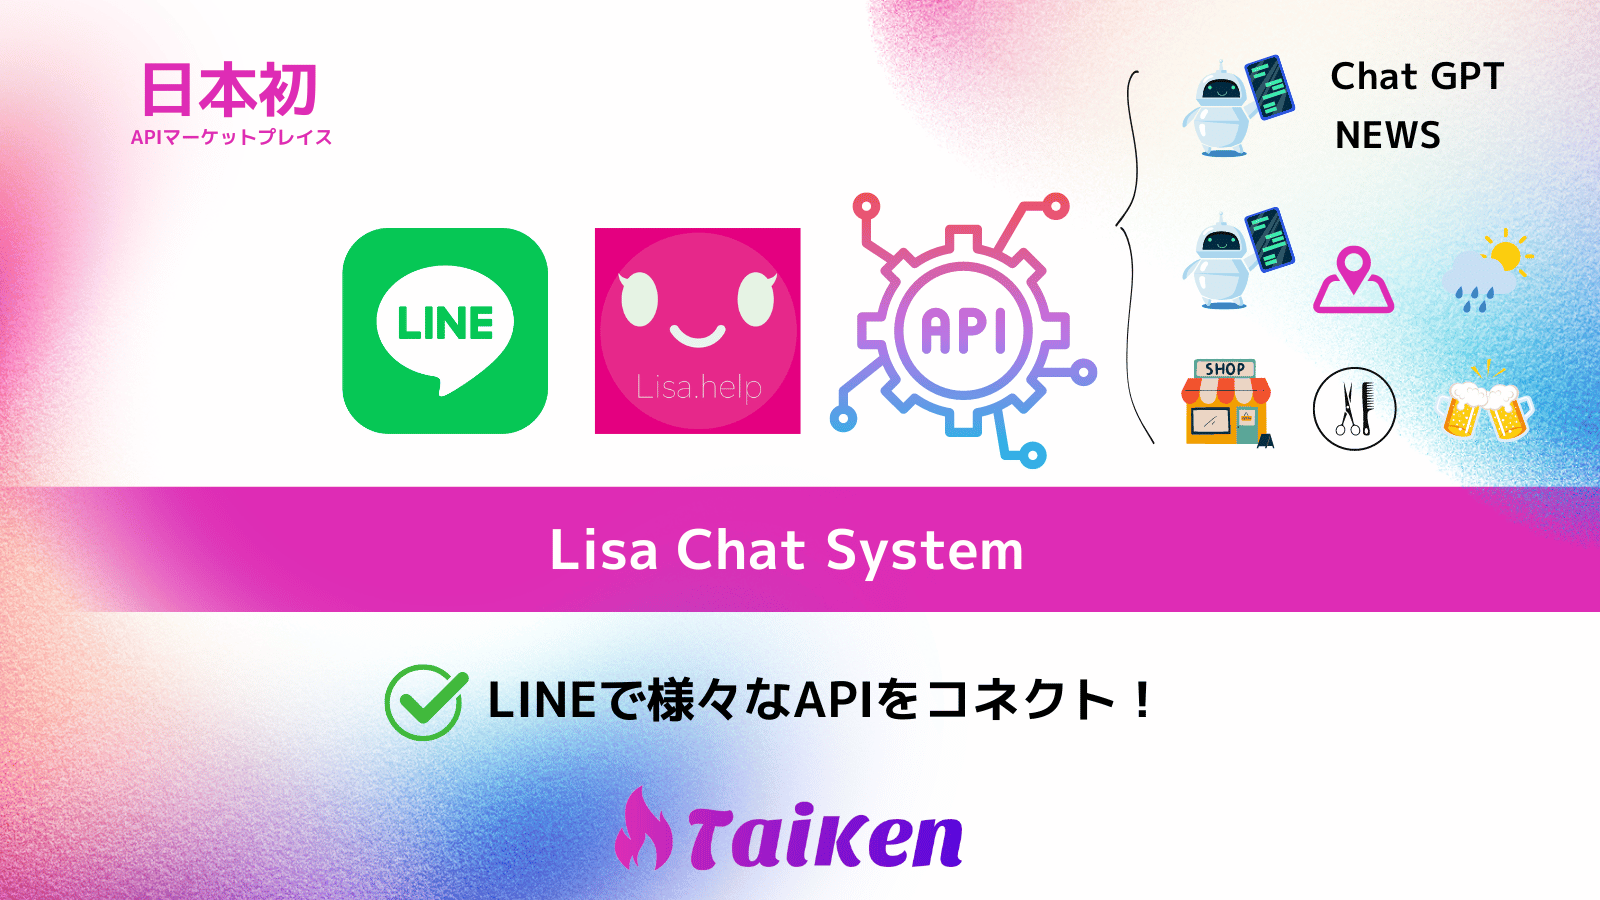 ChatGPT搭載のコンシェルジュサービスAPI Lisa Chat System